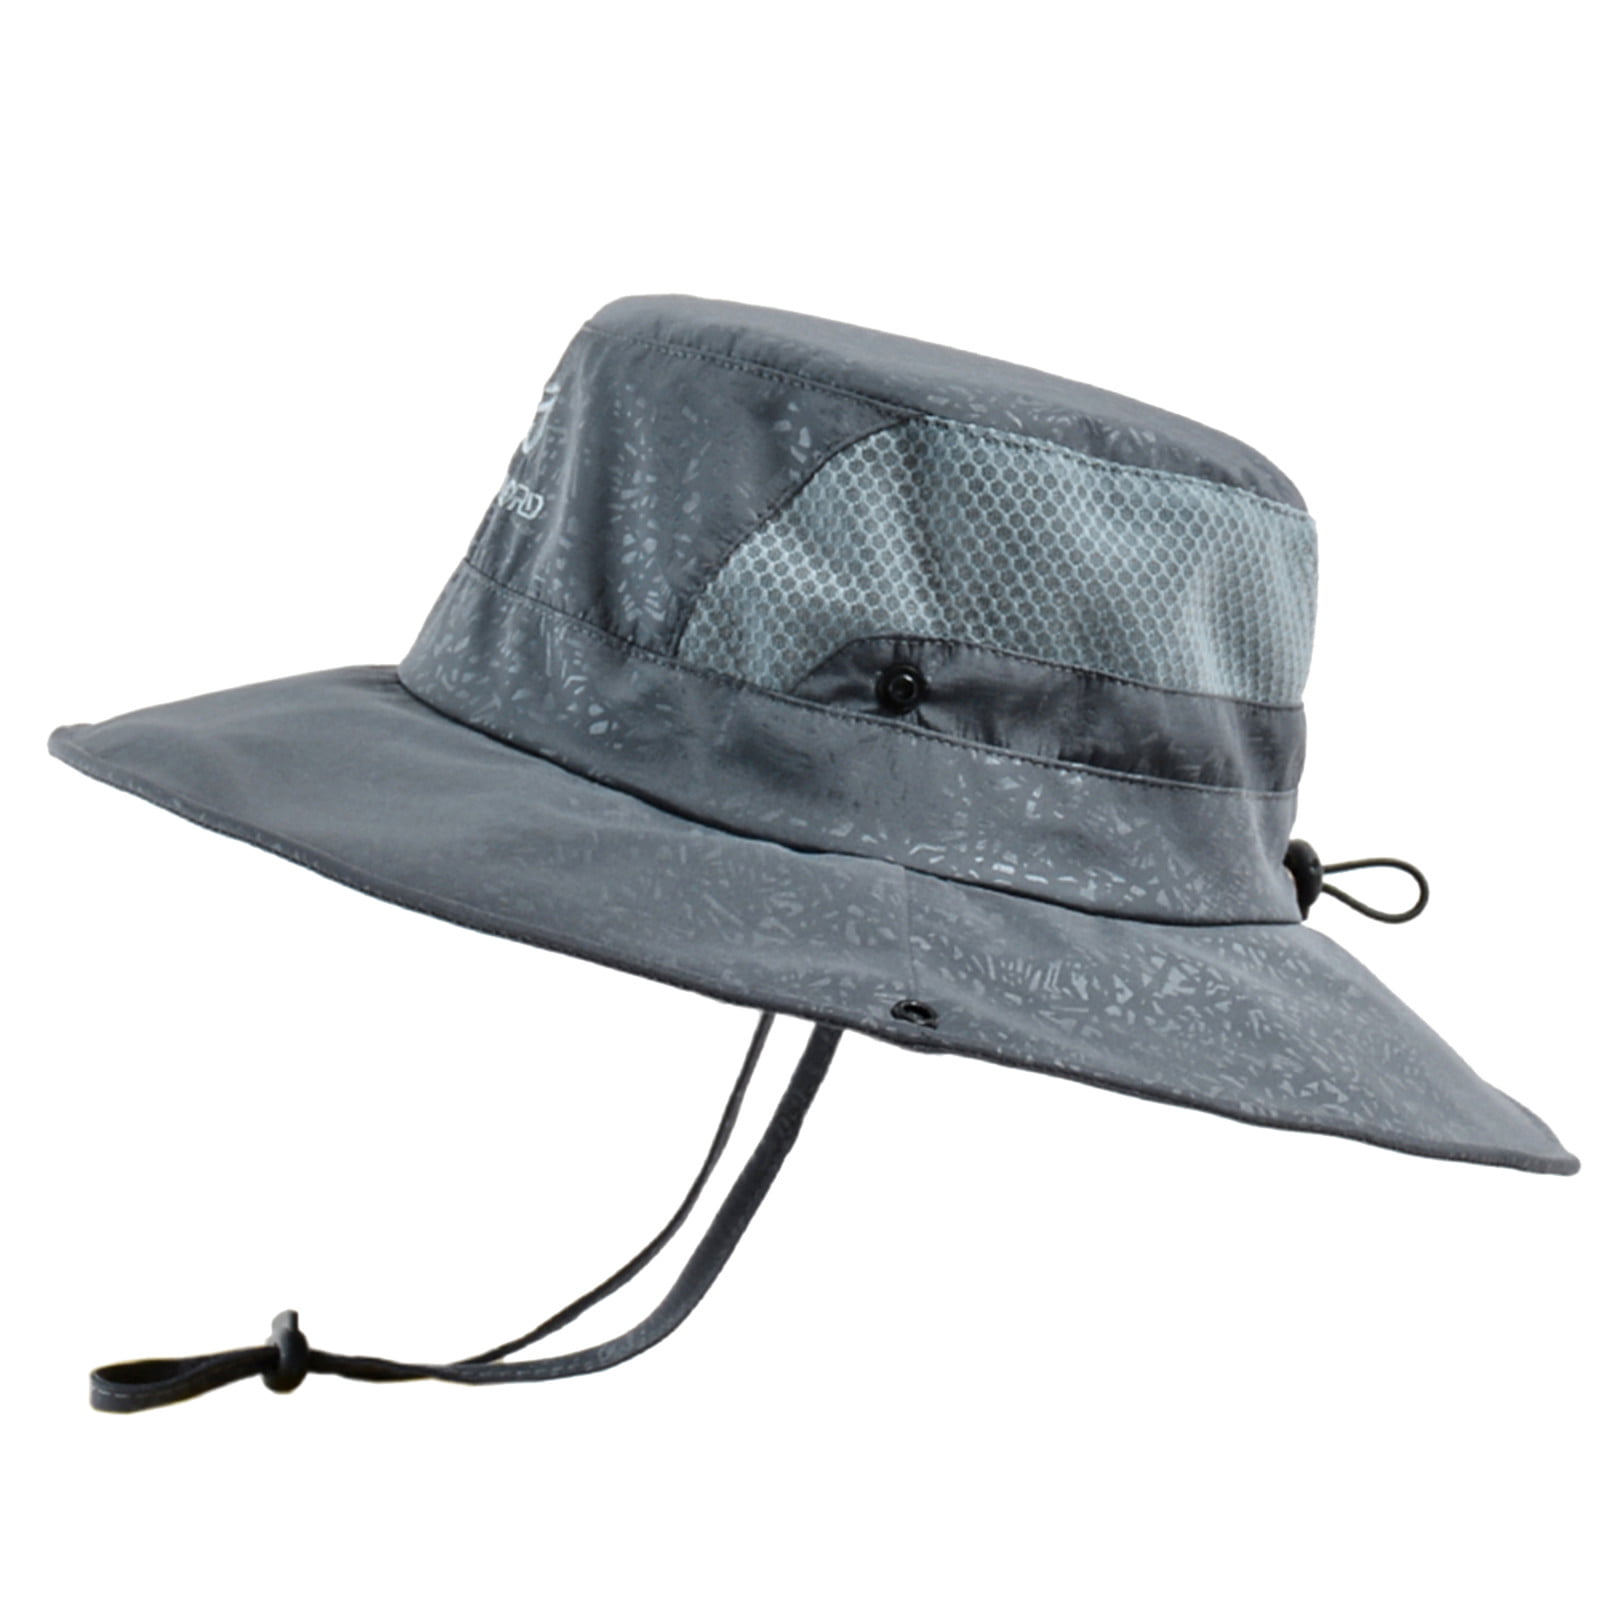 labakihah bucket hat hat gray fishing foldable sun shade color breathable hat casual men hood dark outdoor solid mountaineering rope bucket